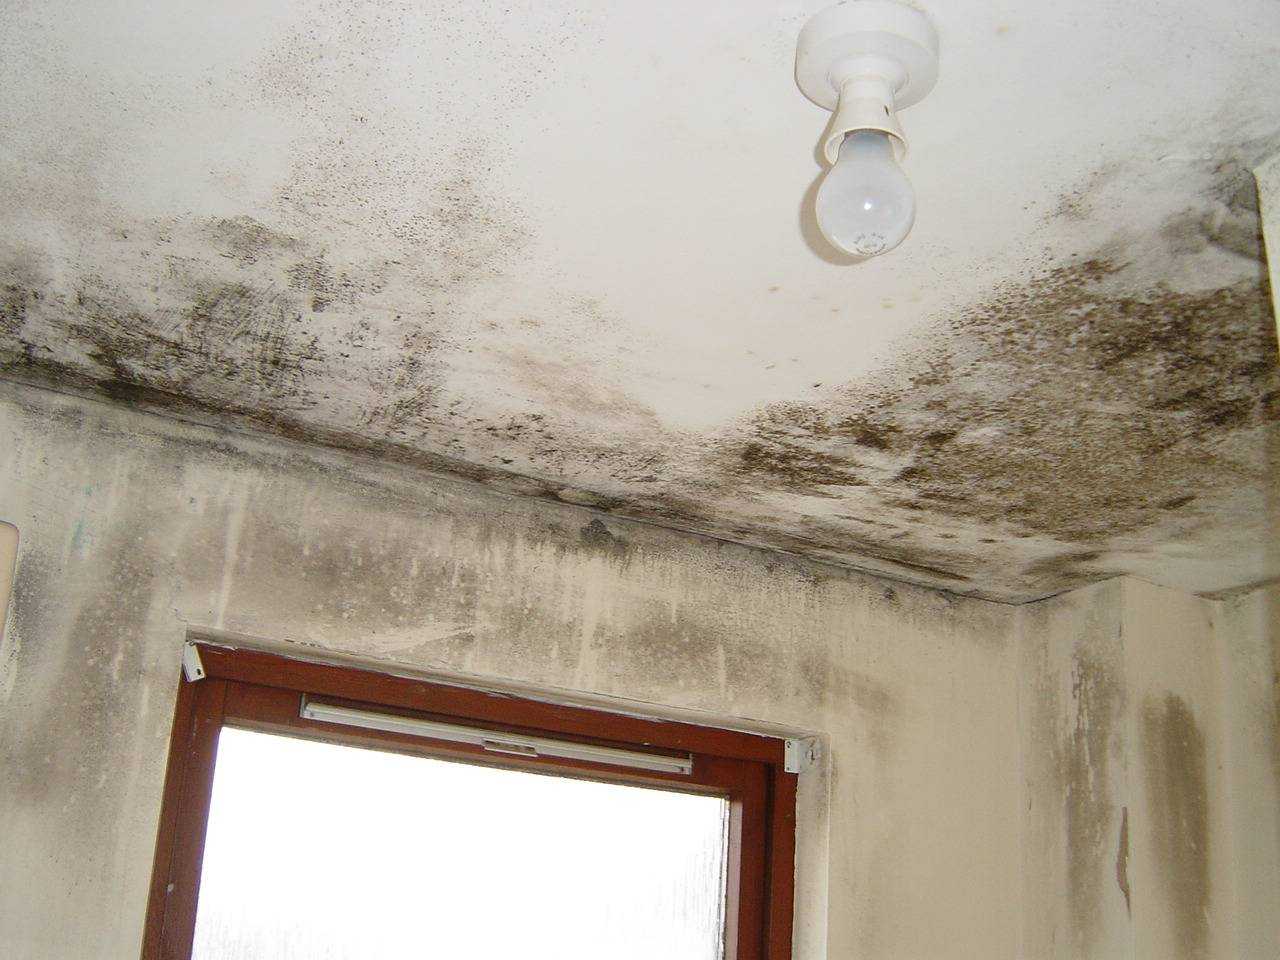 Как избавиться от плесени и грибка на стенах в квартире или доме